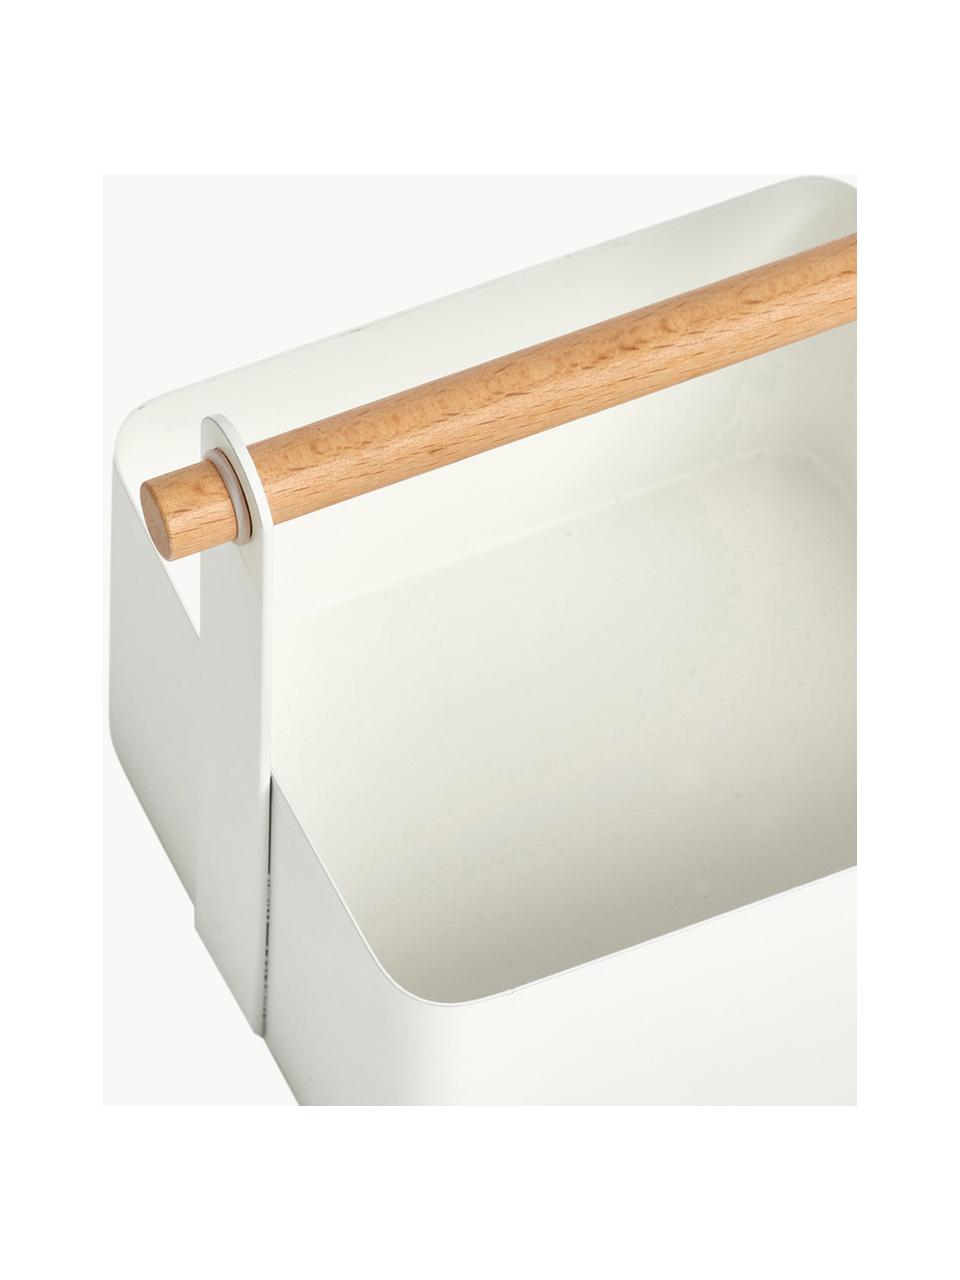 Panier de rangement Ledino, Blanc, bois clair, larg. 15 x haut. 16 cm